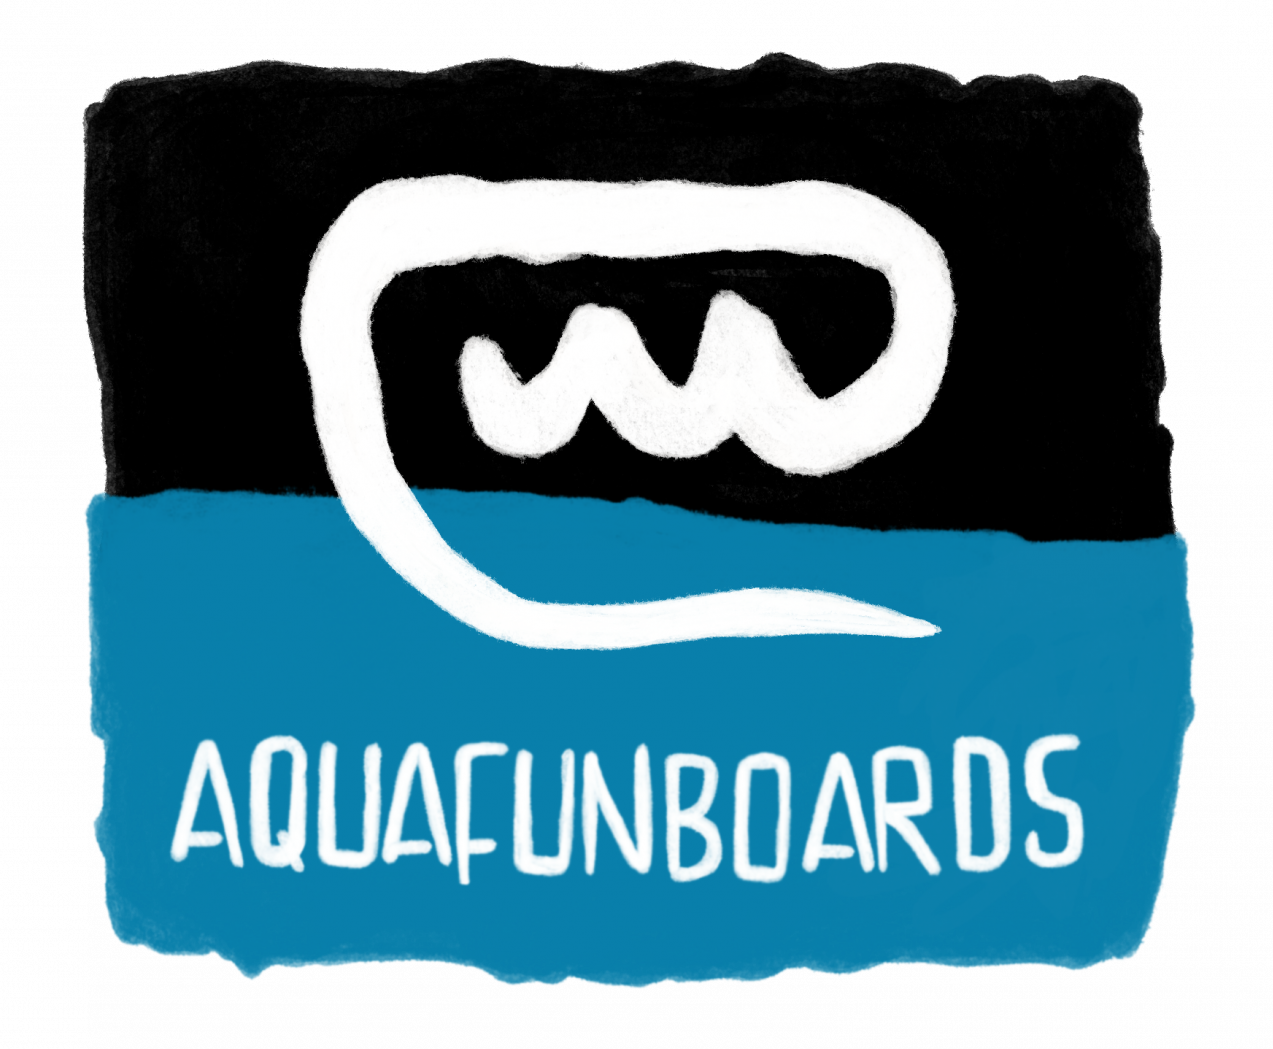 Aquafunboards logo